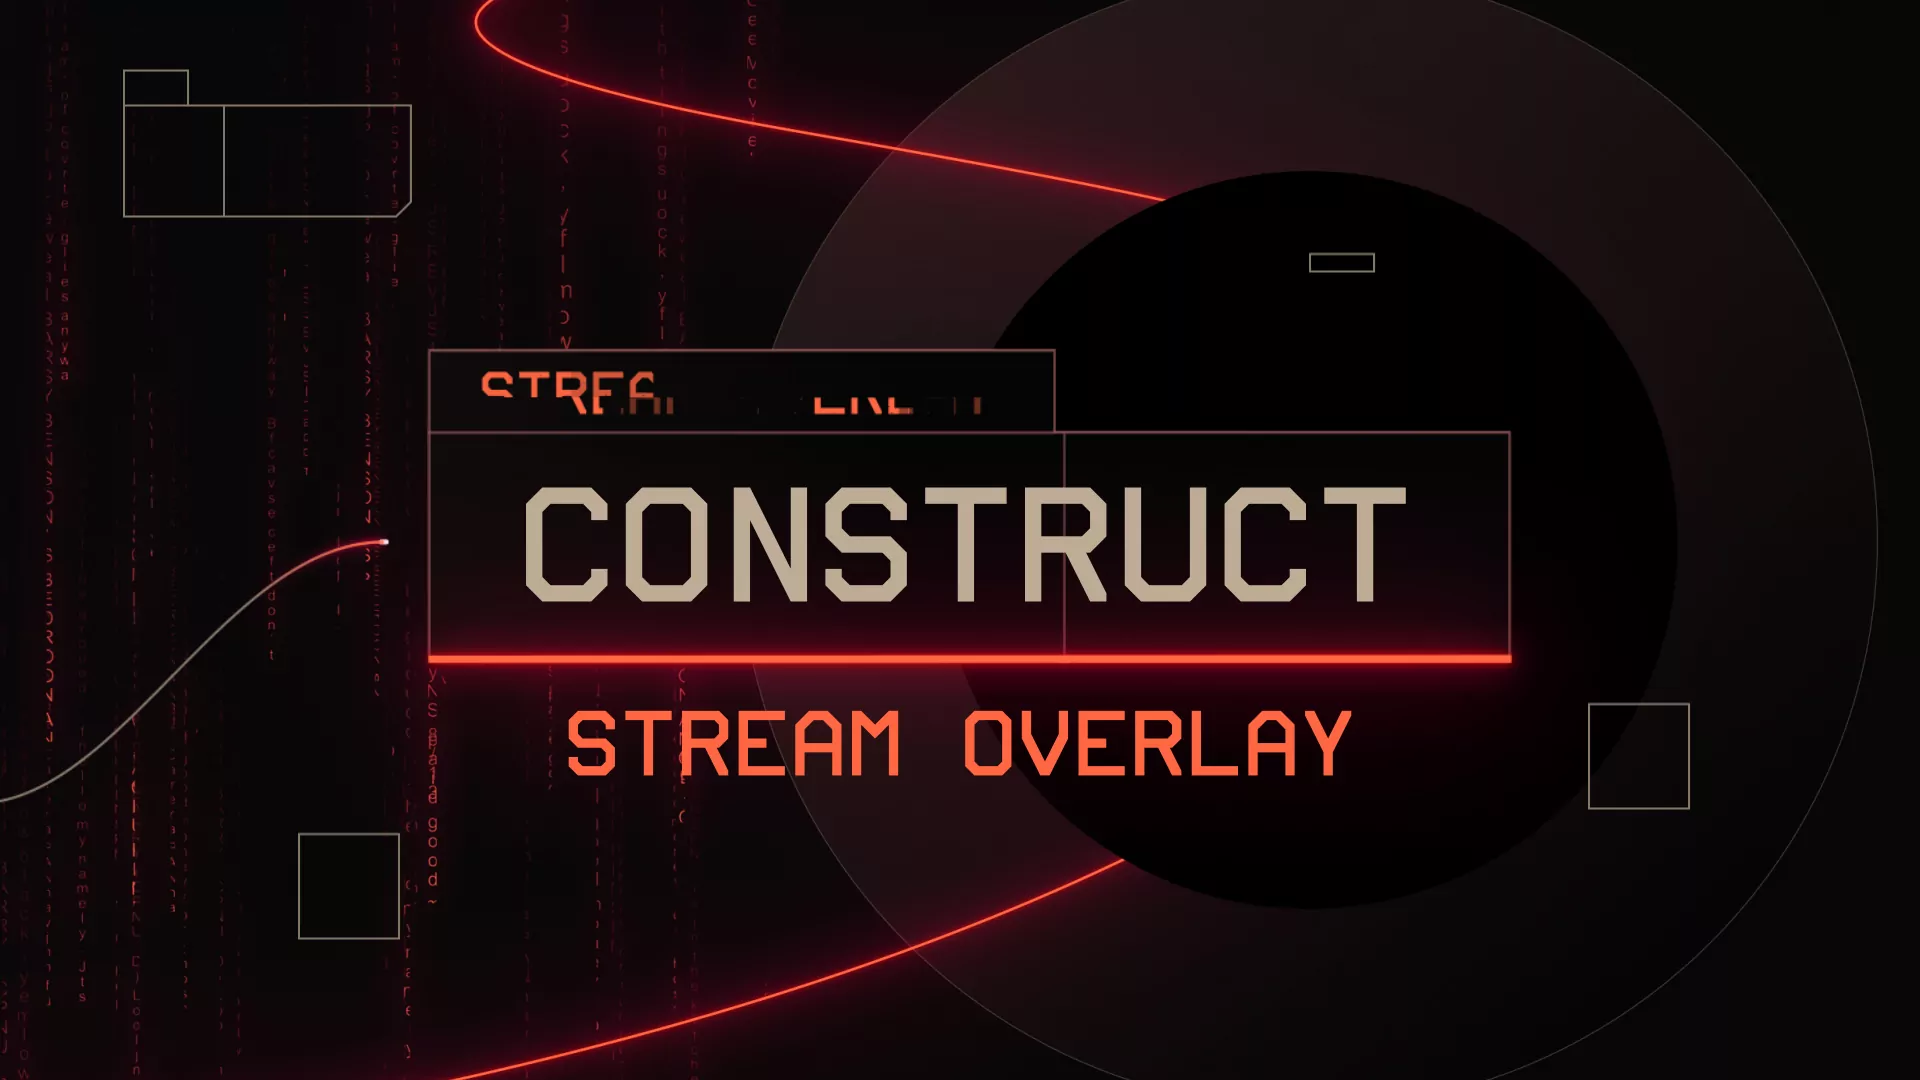 Construct - Stream Overlay - Main Image